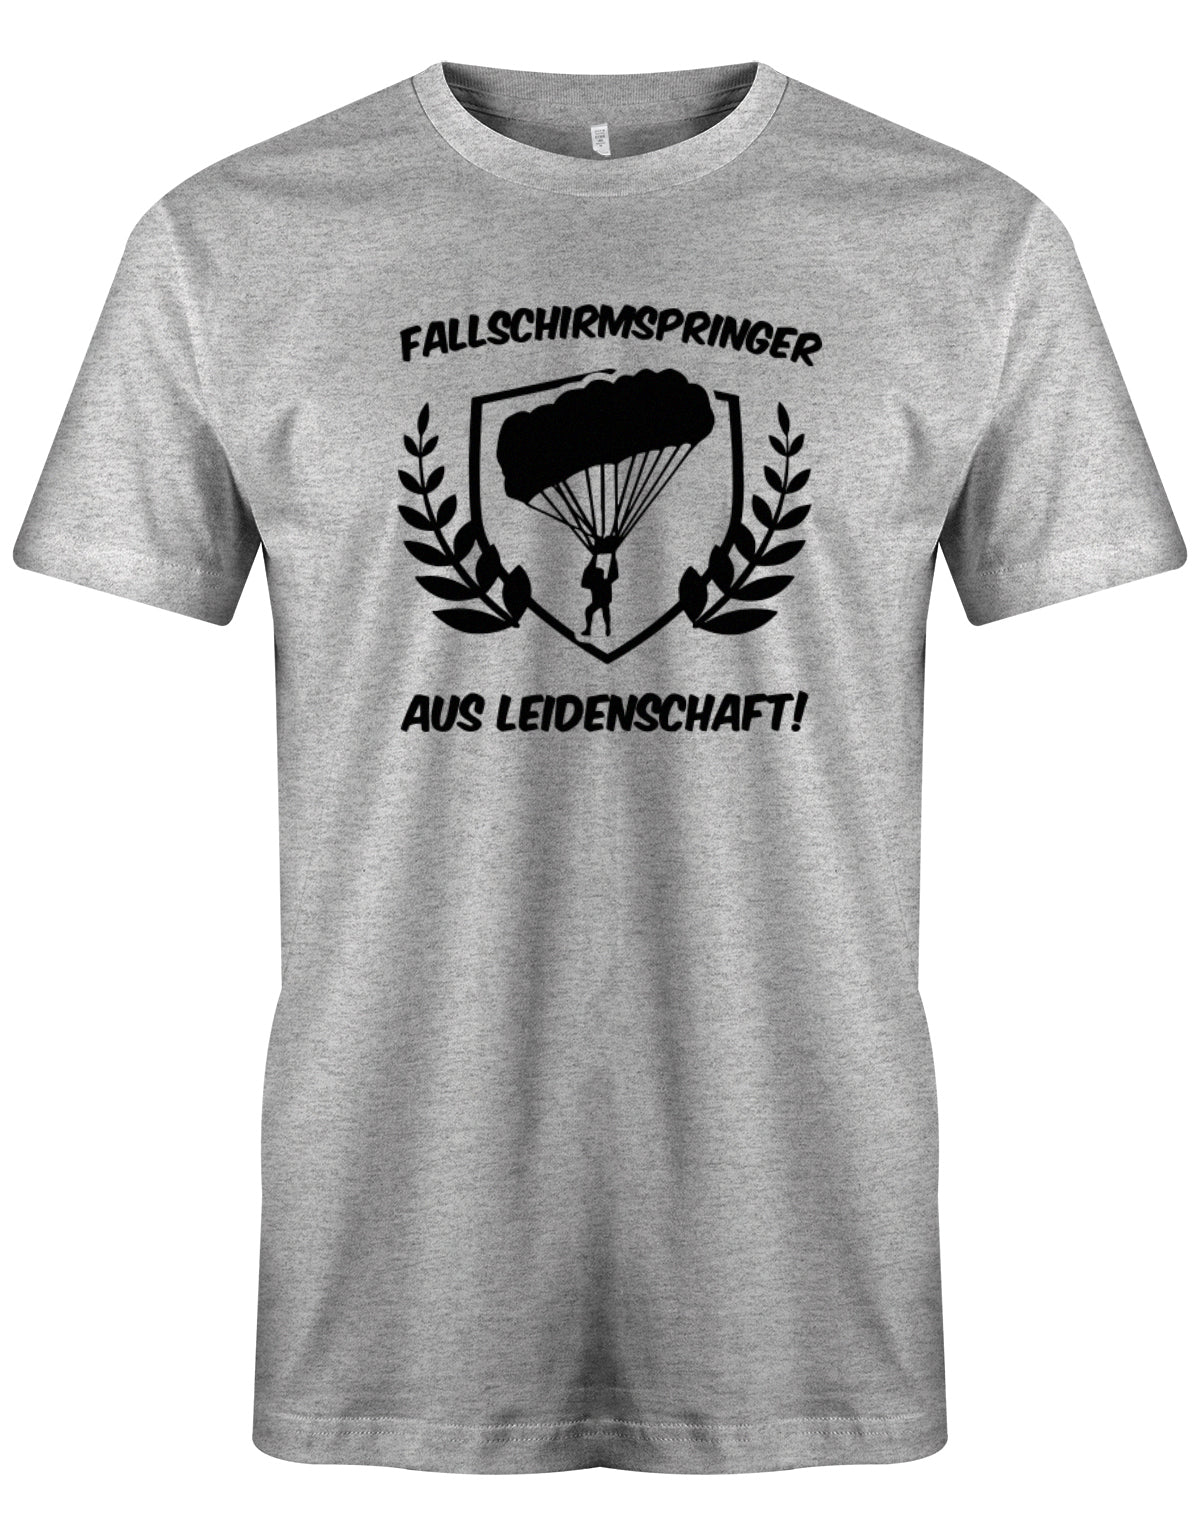 herren-shirt-graublkGDIHJSoIM6